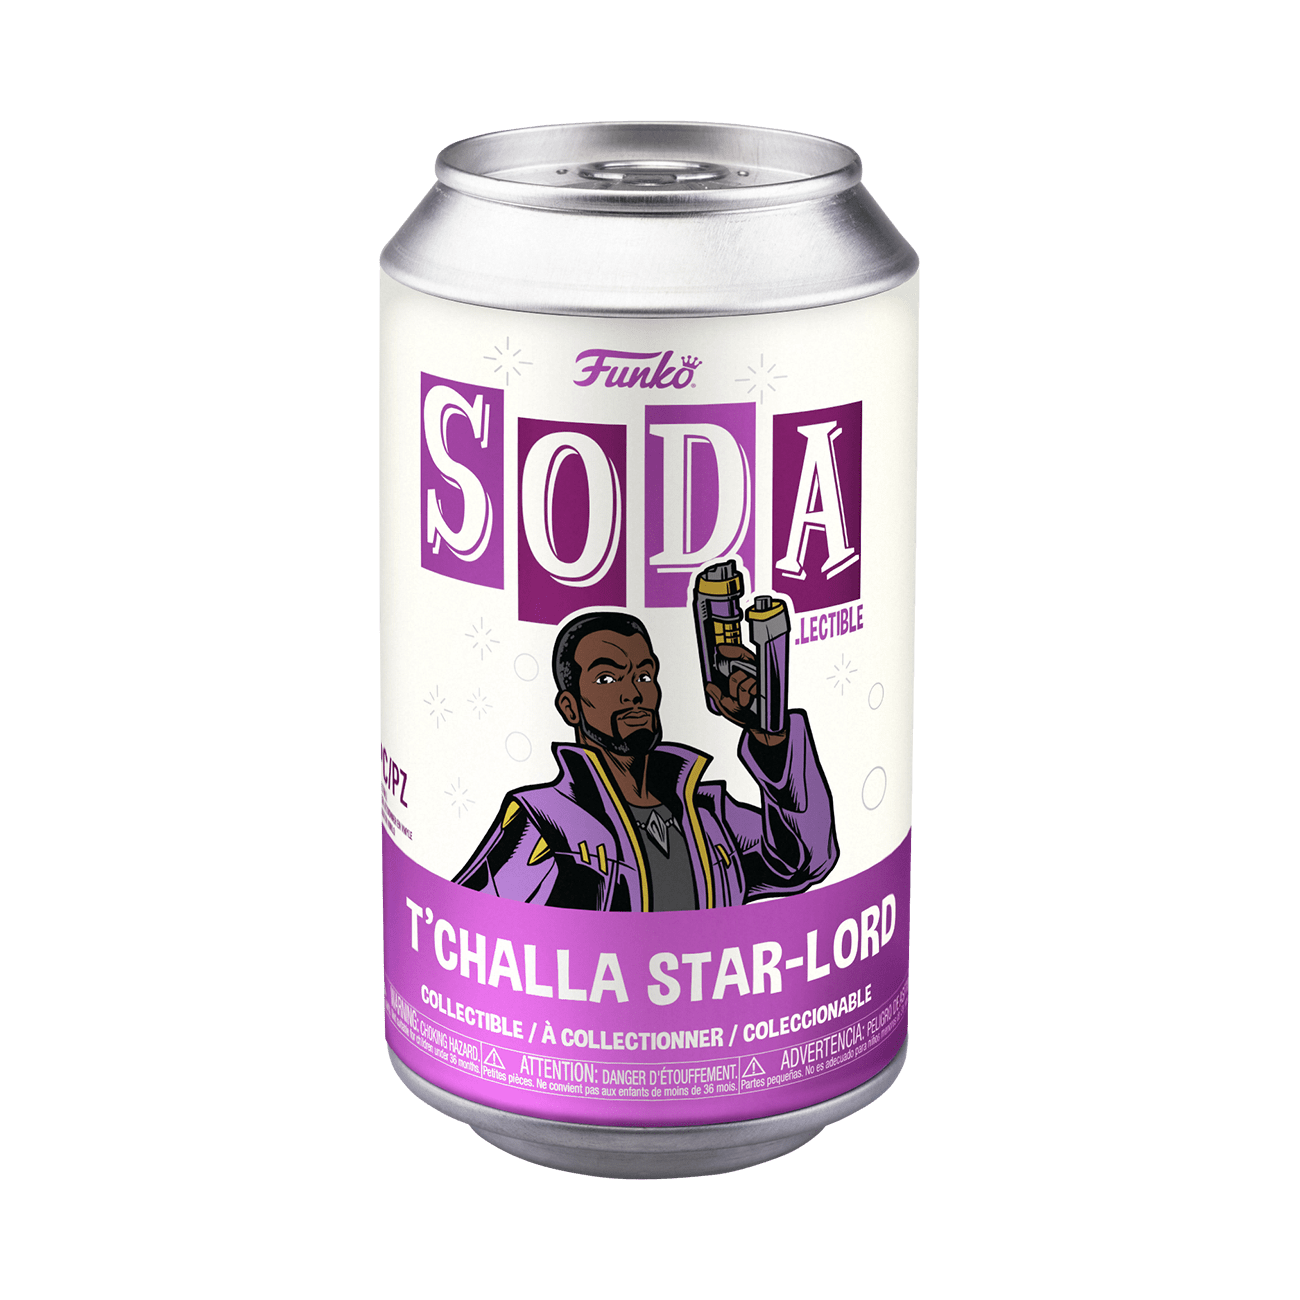 Funko Marvel Studios What If? T'Challa Star-lord Vinyl Soda Figure Limited Edition